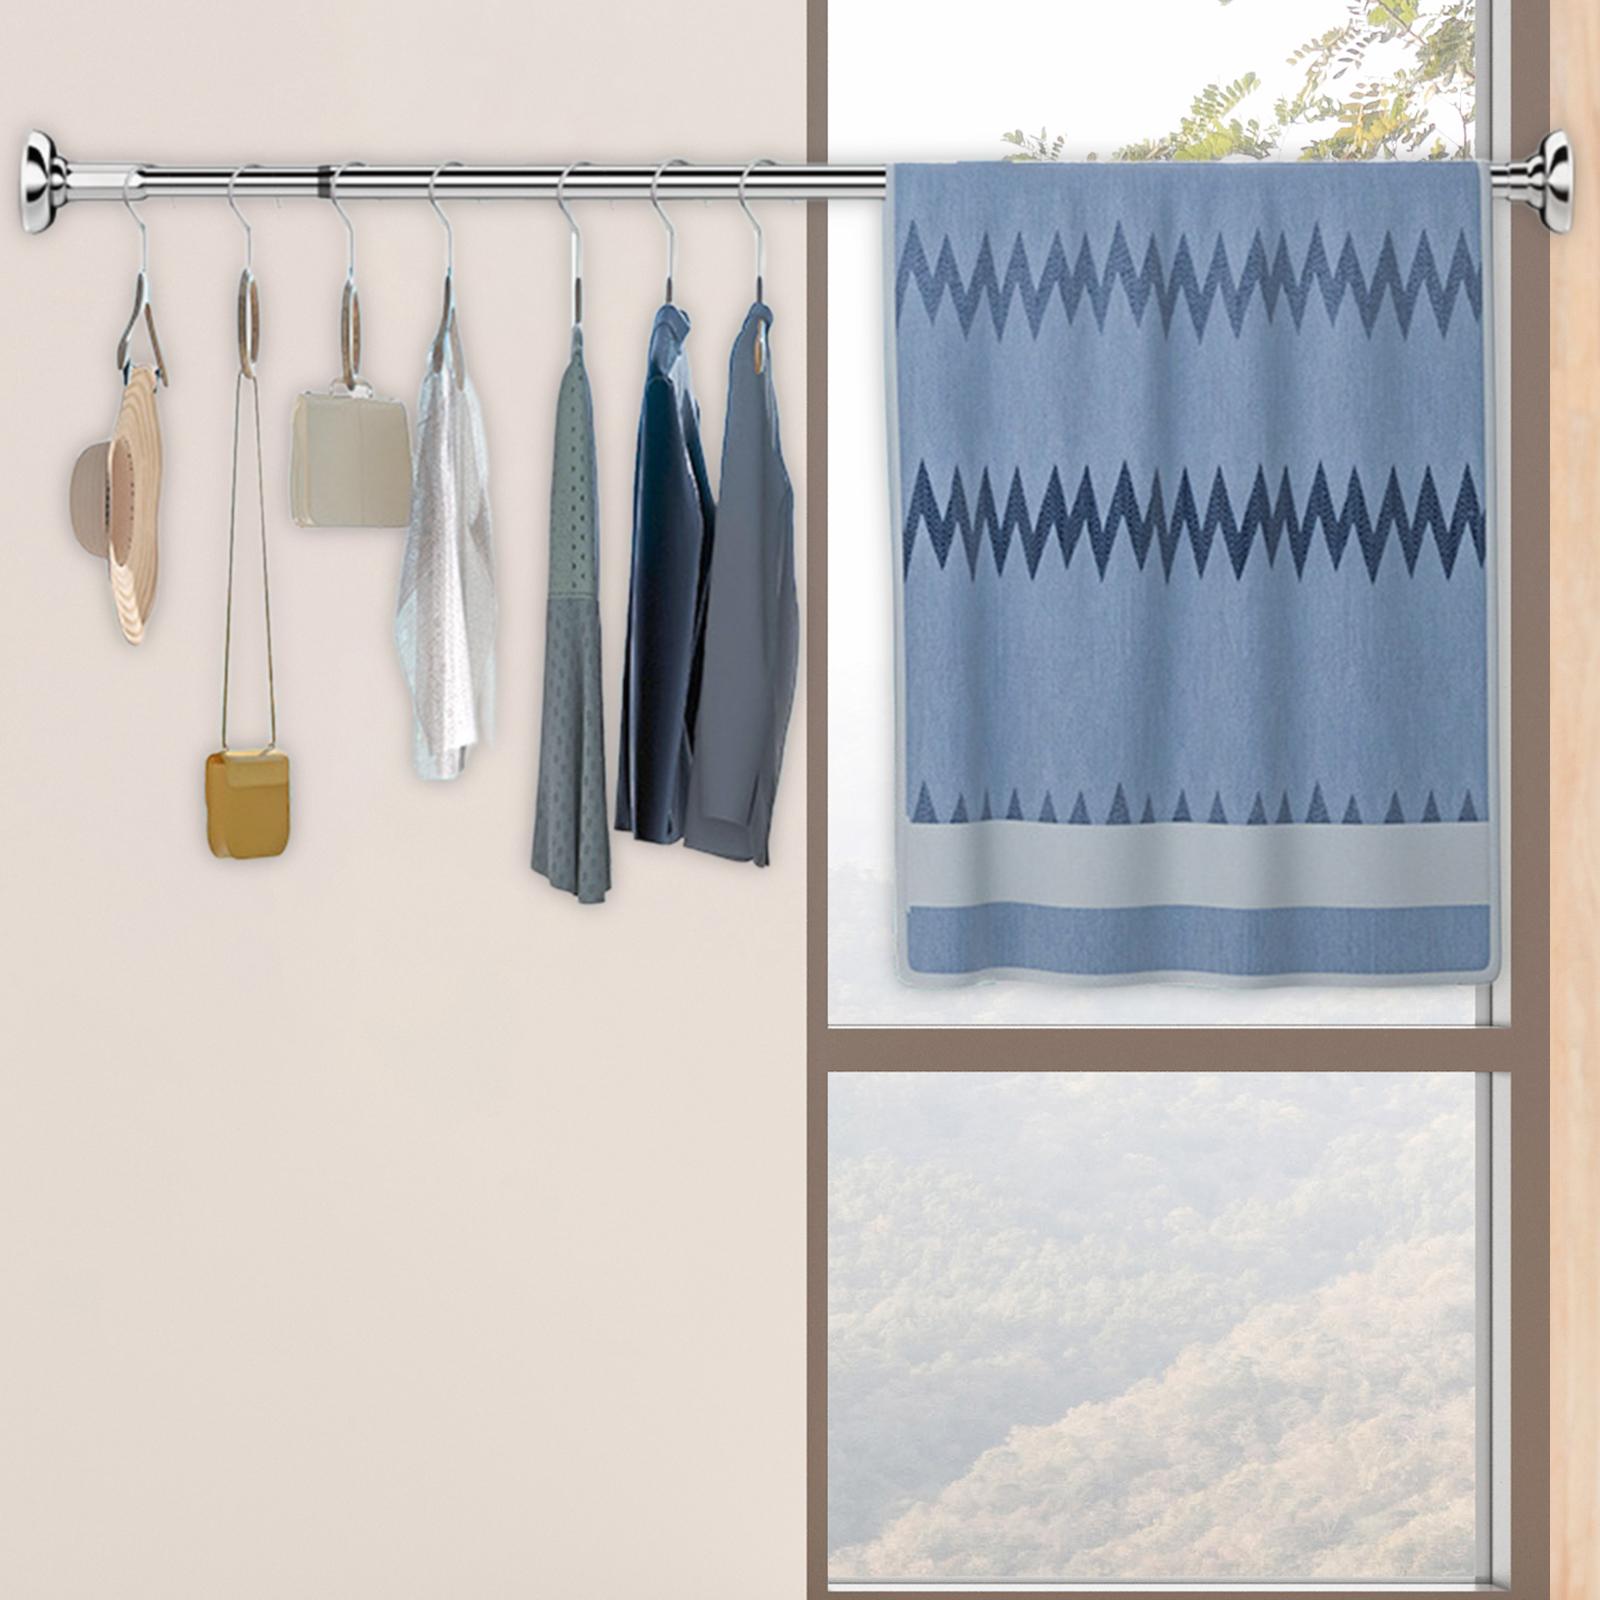 Telescopic Clothing Rod Closet Hanging Pole for Laundry Room Wardrobe Closet 0.5m to 0.8m